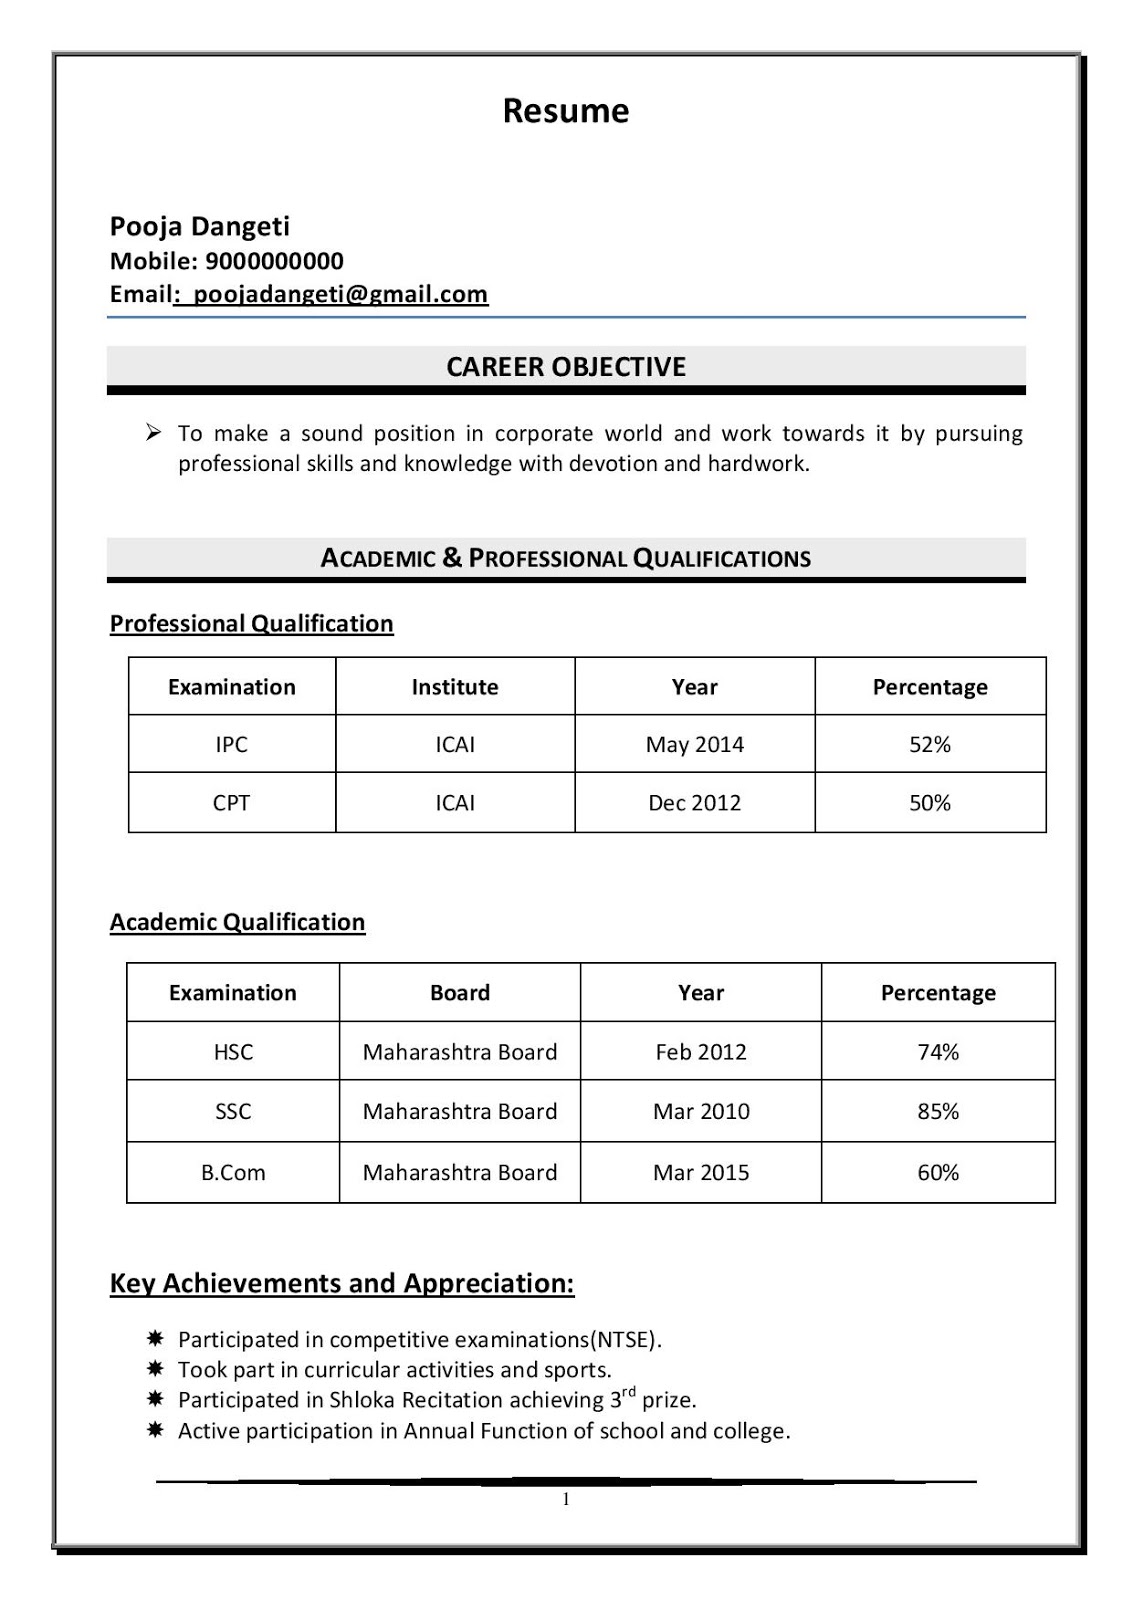 Job Application Resume Format For Freshers Bcom - BEST RESUME EXAMPLES